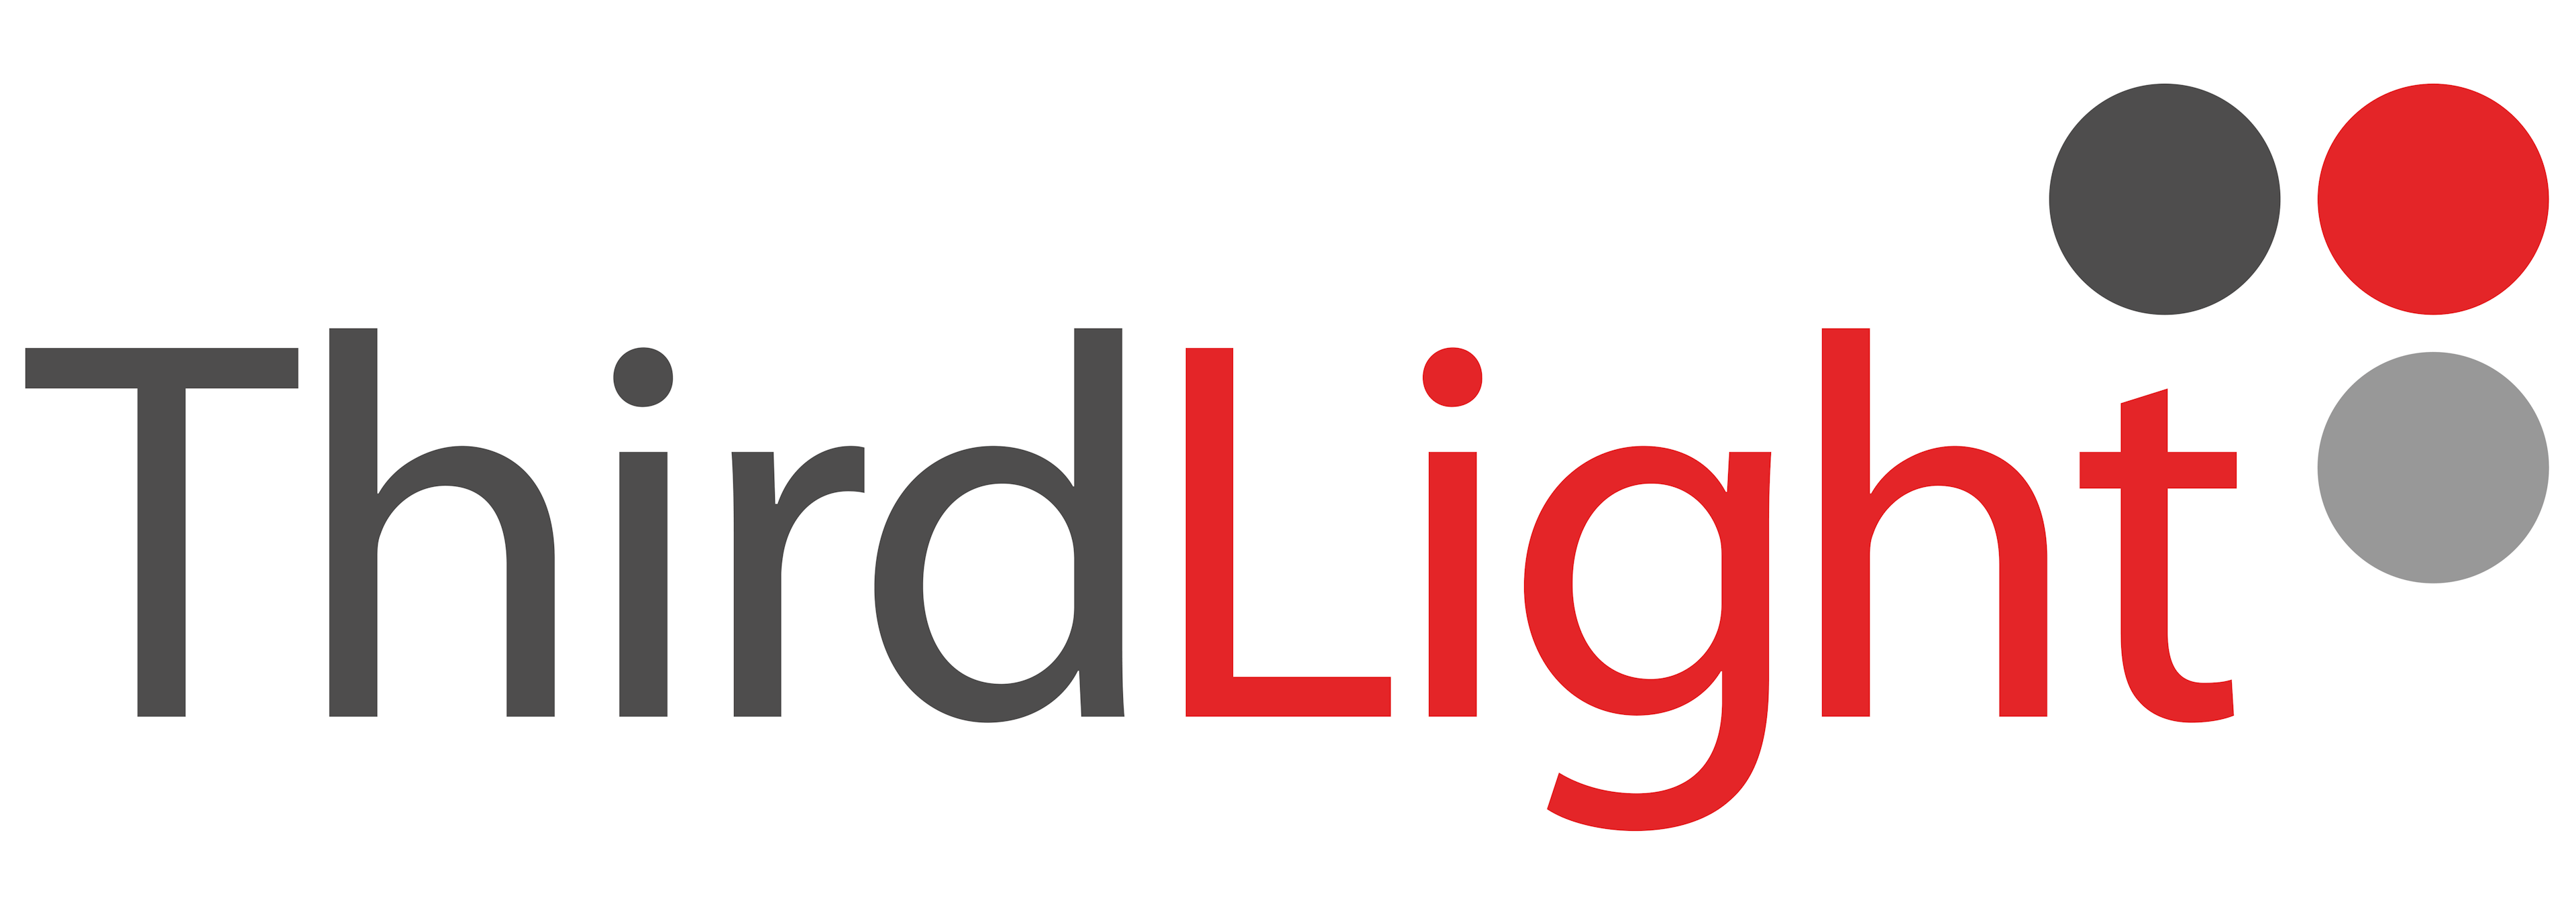 Third Light Logo